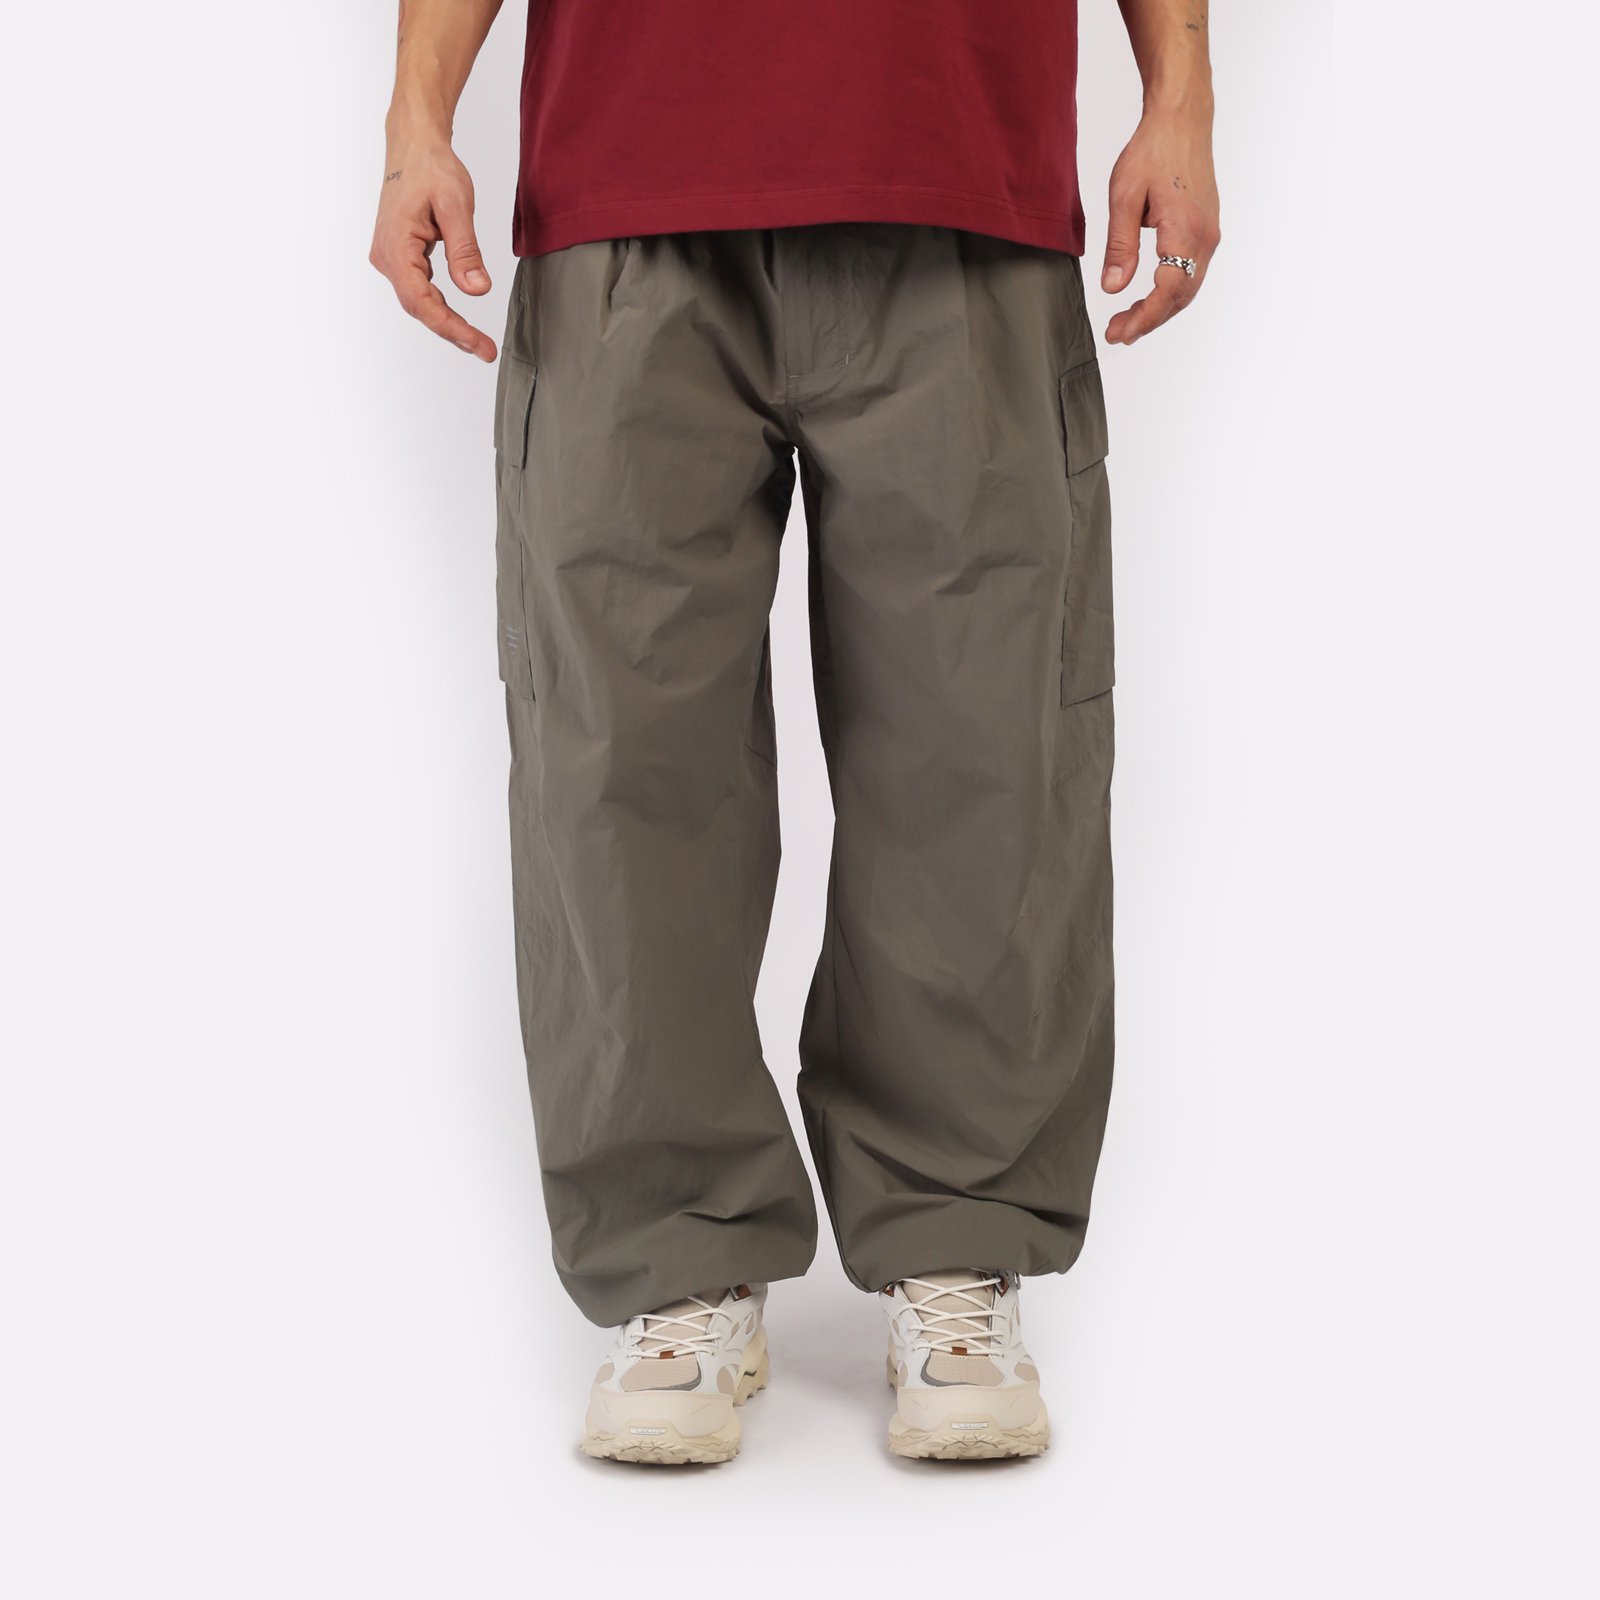 мужские серые брюки KRAKATAU Rm176-52 Rm176-52-елово-сер - цена, описание, фото 1